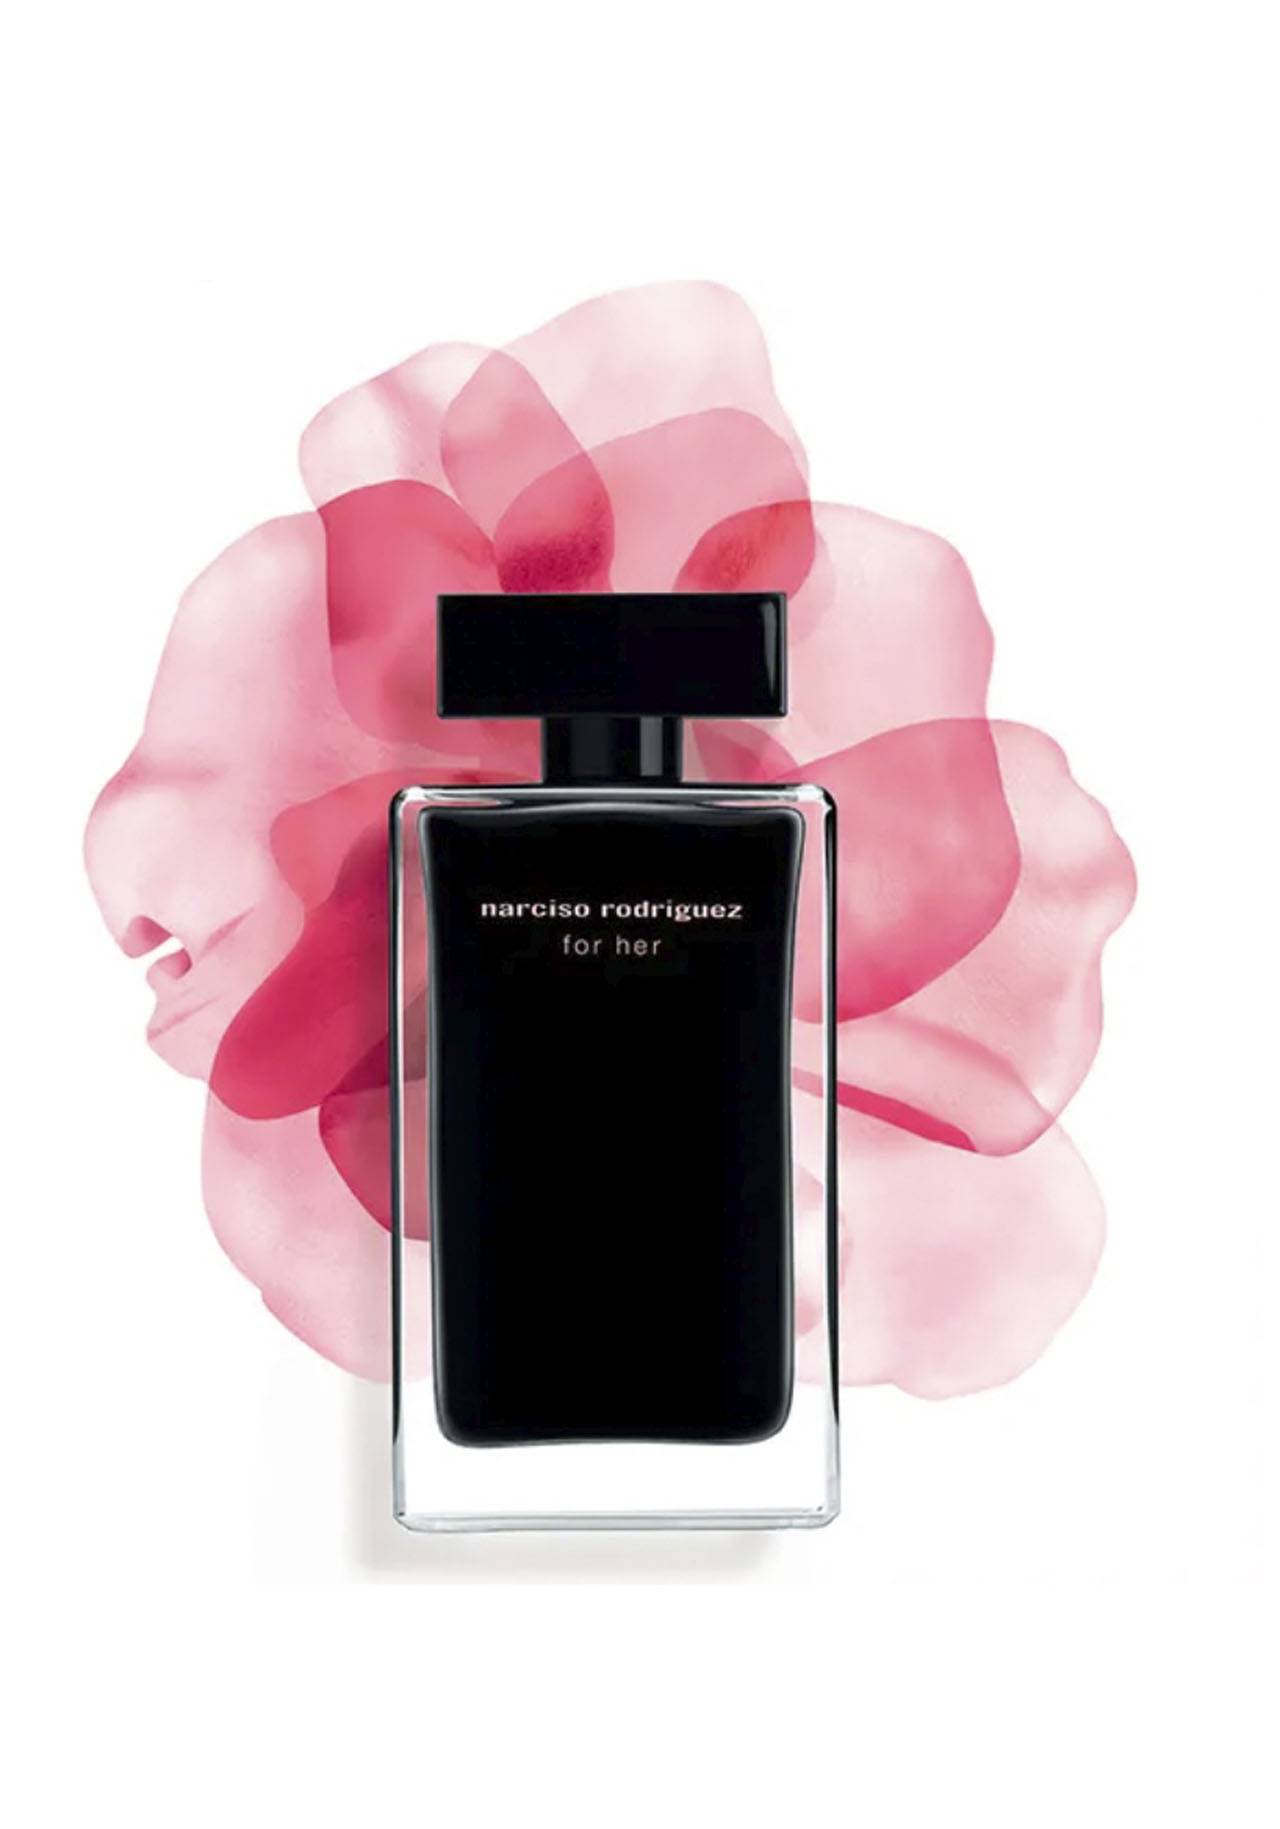 Perfume de otoño: Narciso Rodríguez for Her